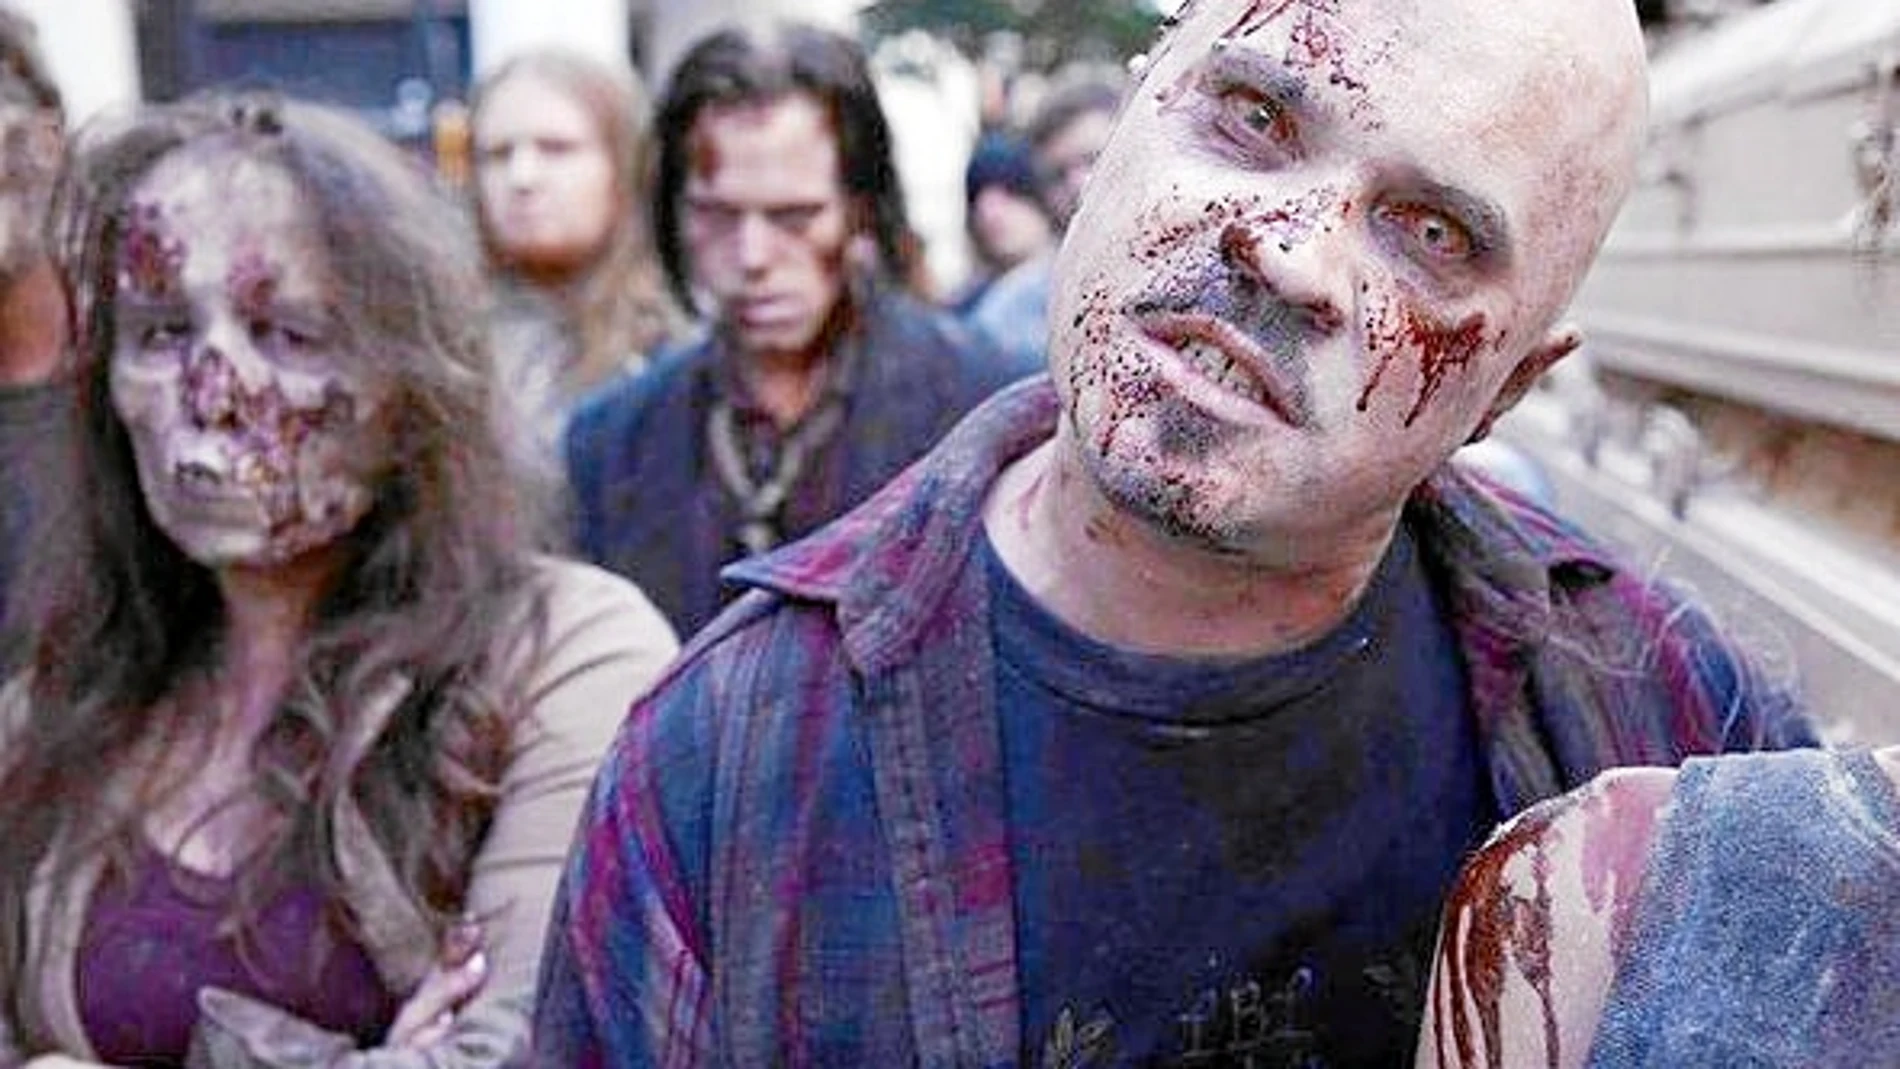 Fox emite ya la segunda temporada de la serie de éxito «The Walking Dead»